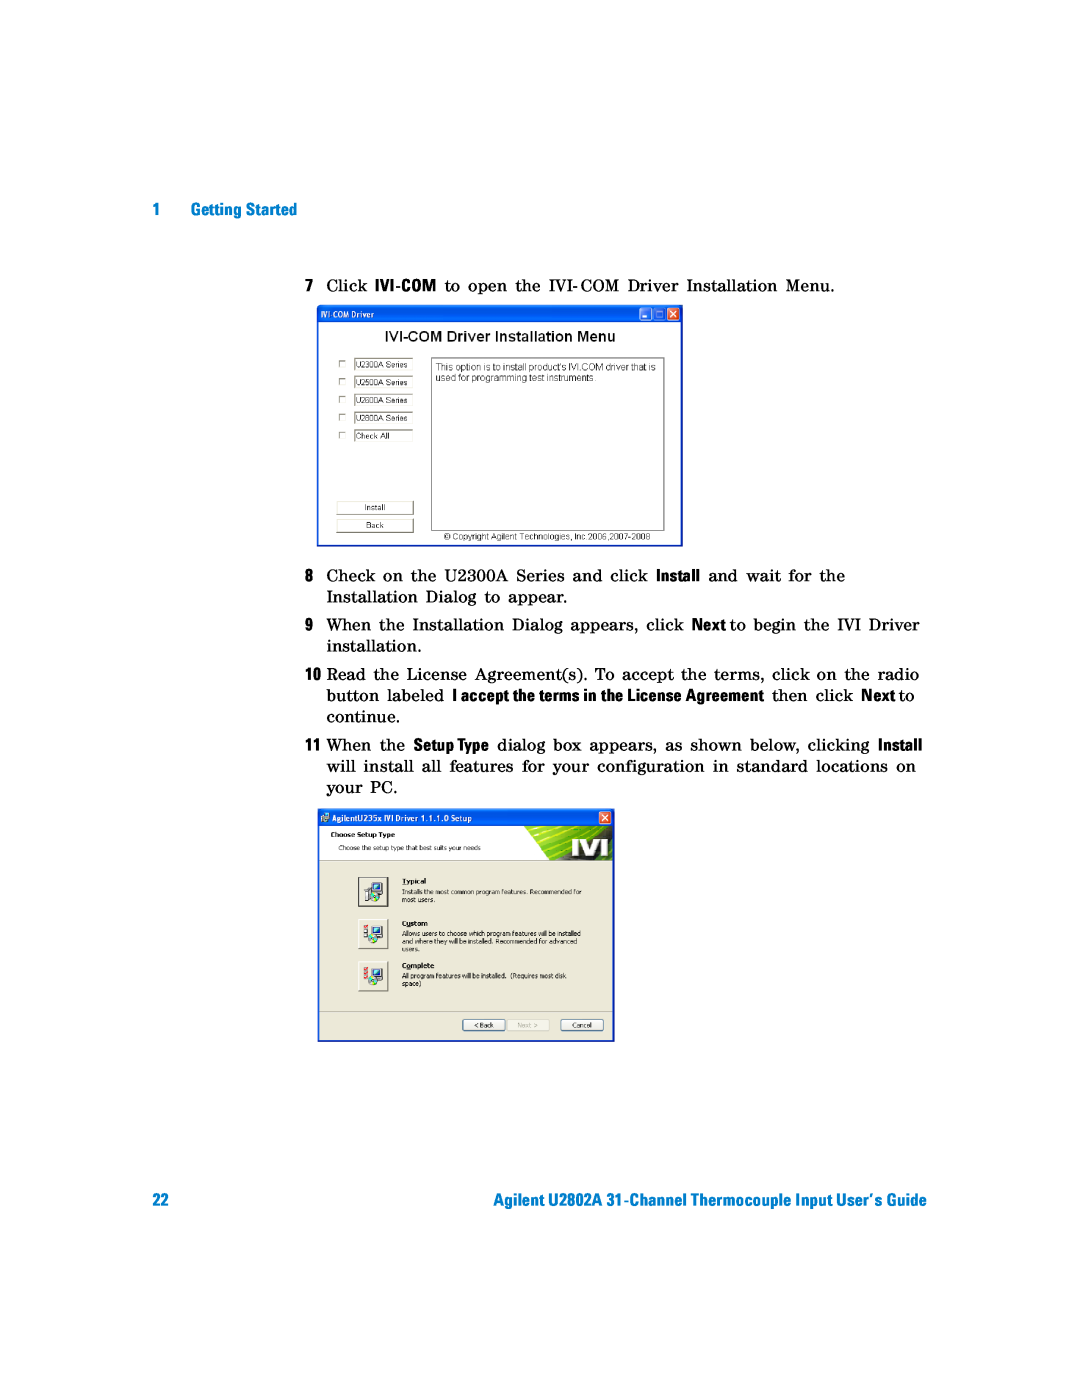 Agilent Technologies U2802A manual Getting Started, 7Click IVI-COM to open the IVI- COM Driver Installation Menu 